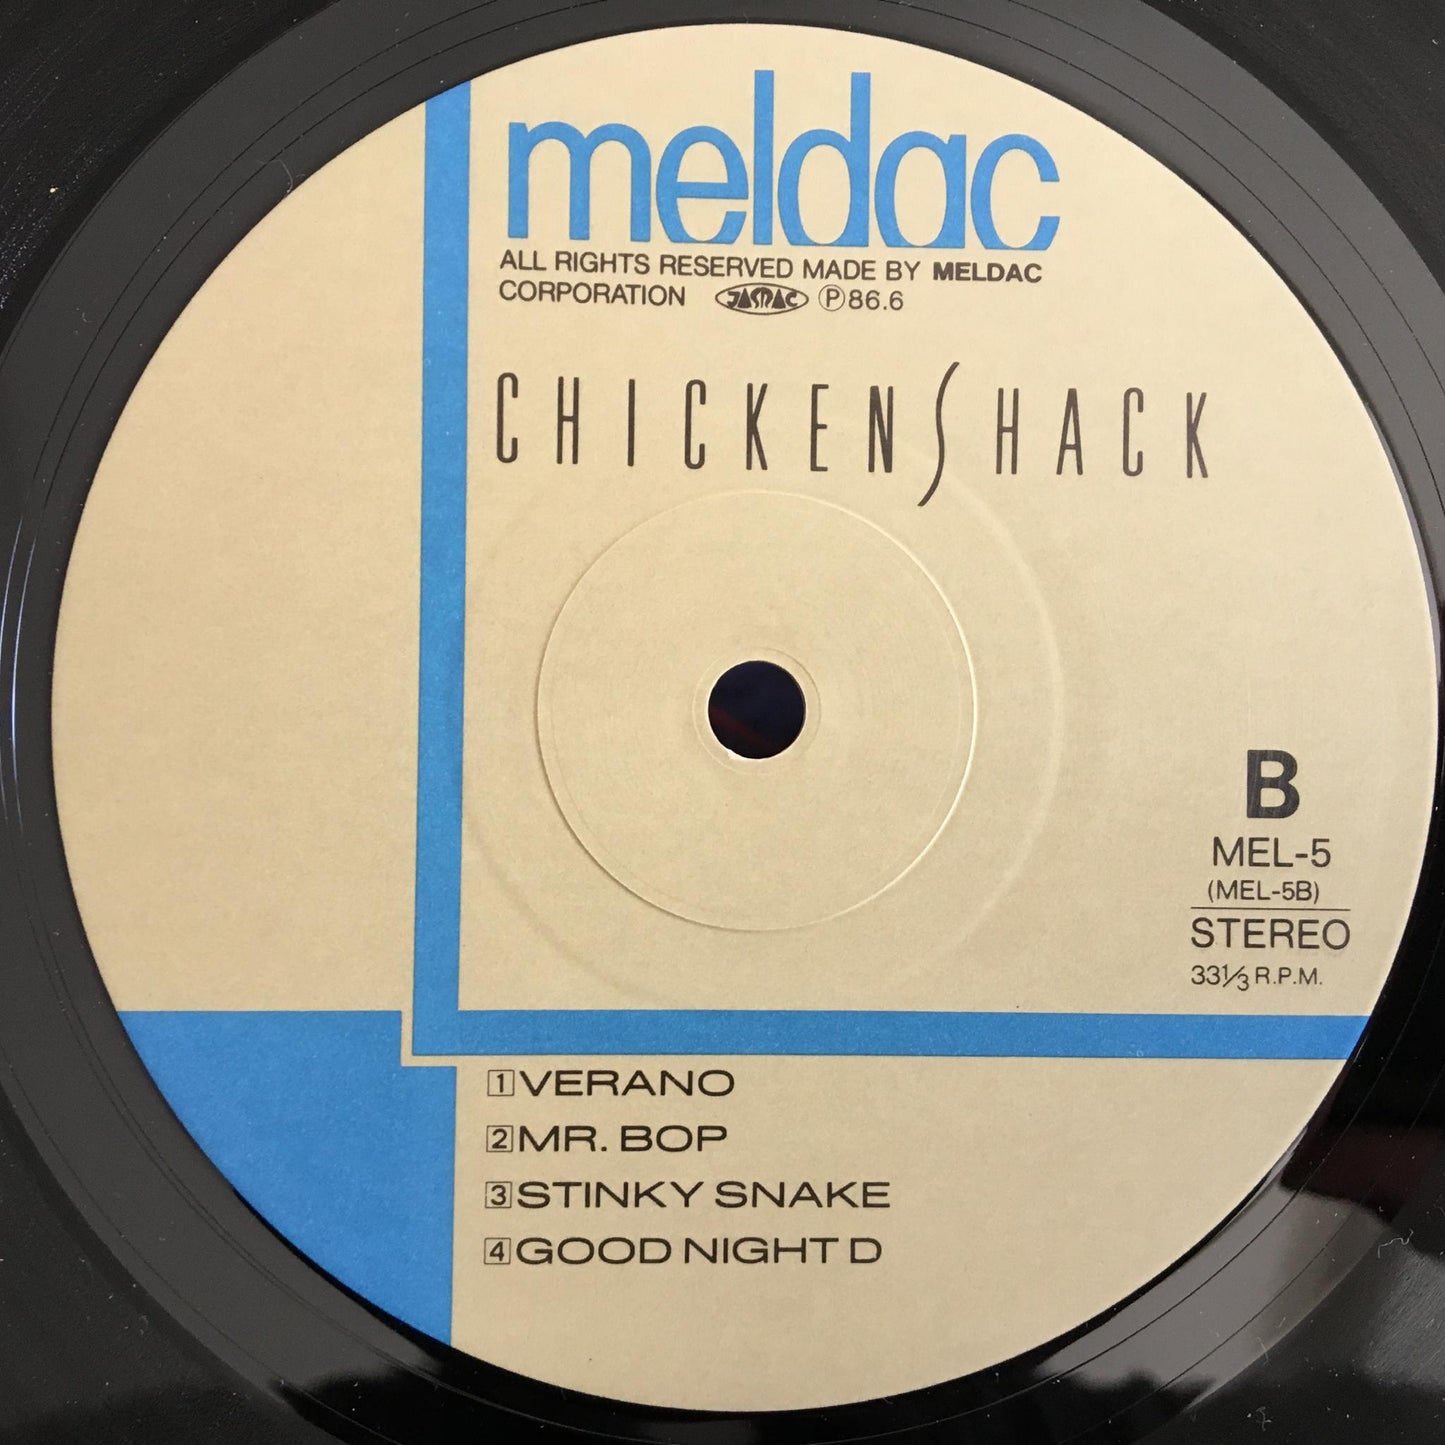 ChickenShack – ChickenShack